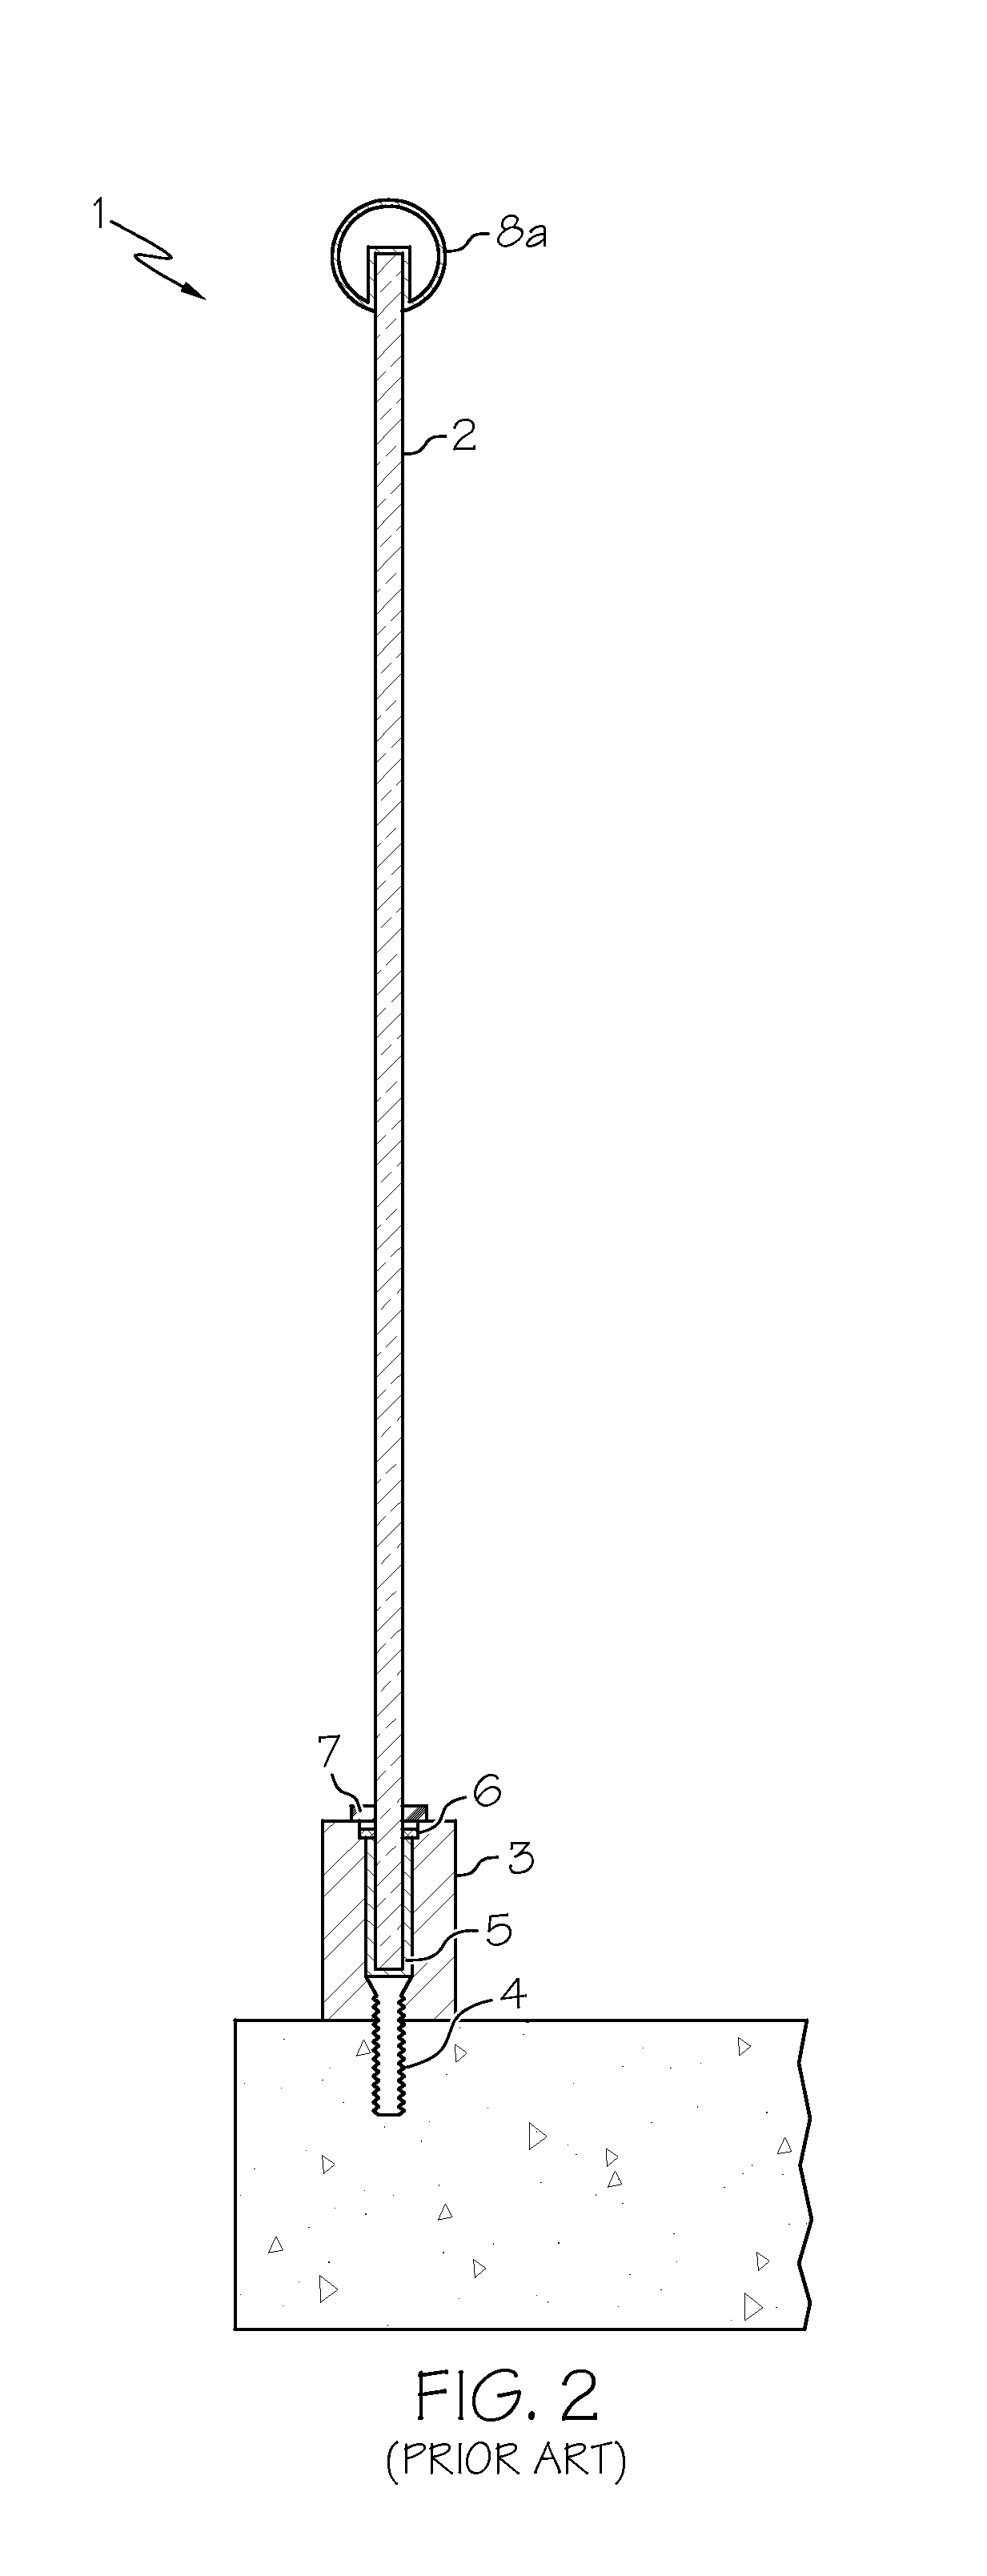 Glass railing anchor system